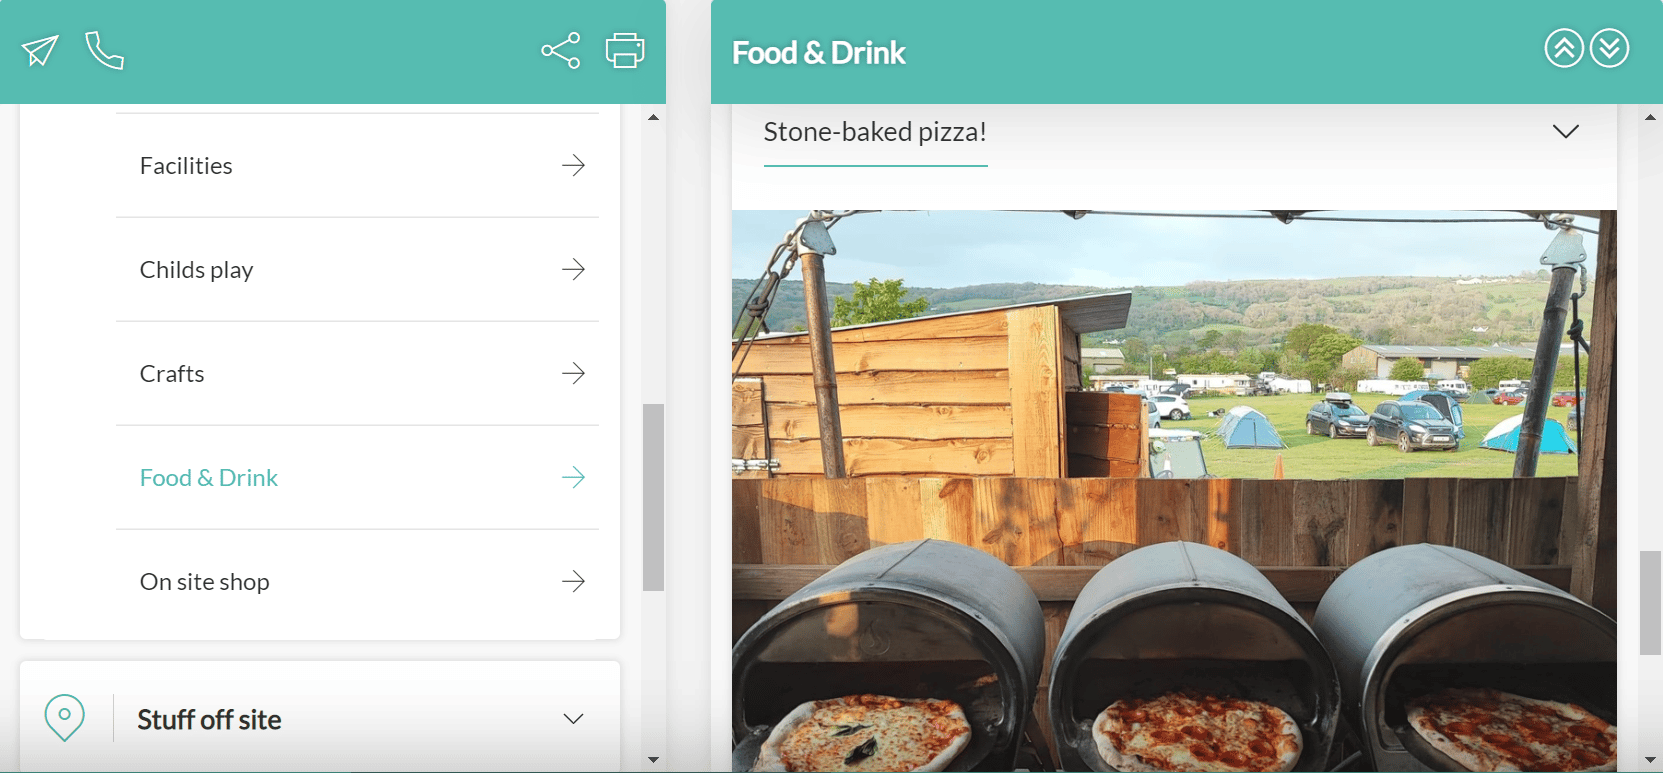 Petruth Paddocks Campsite Screenshot of Food & Drink